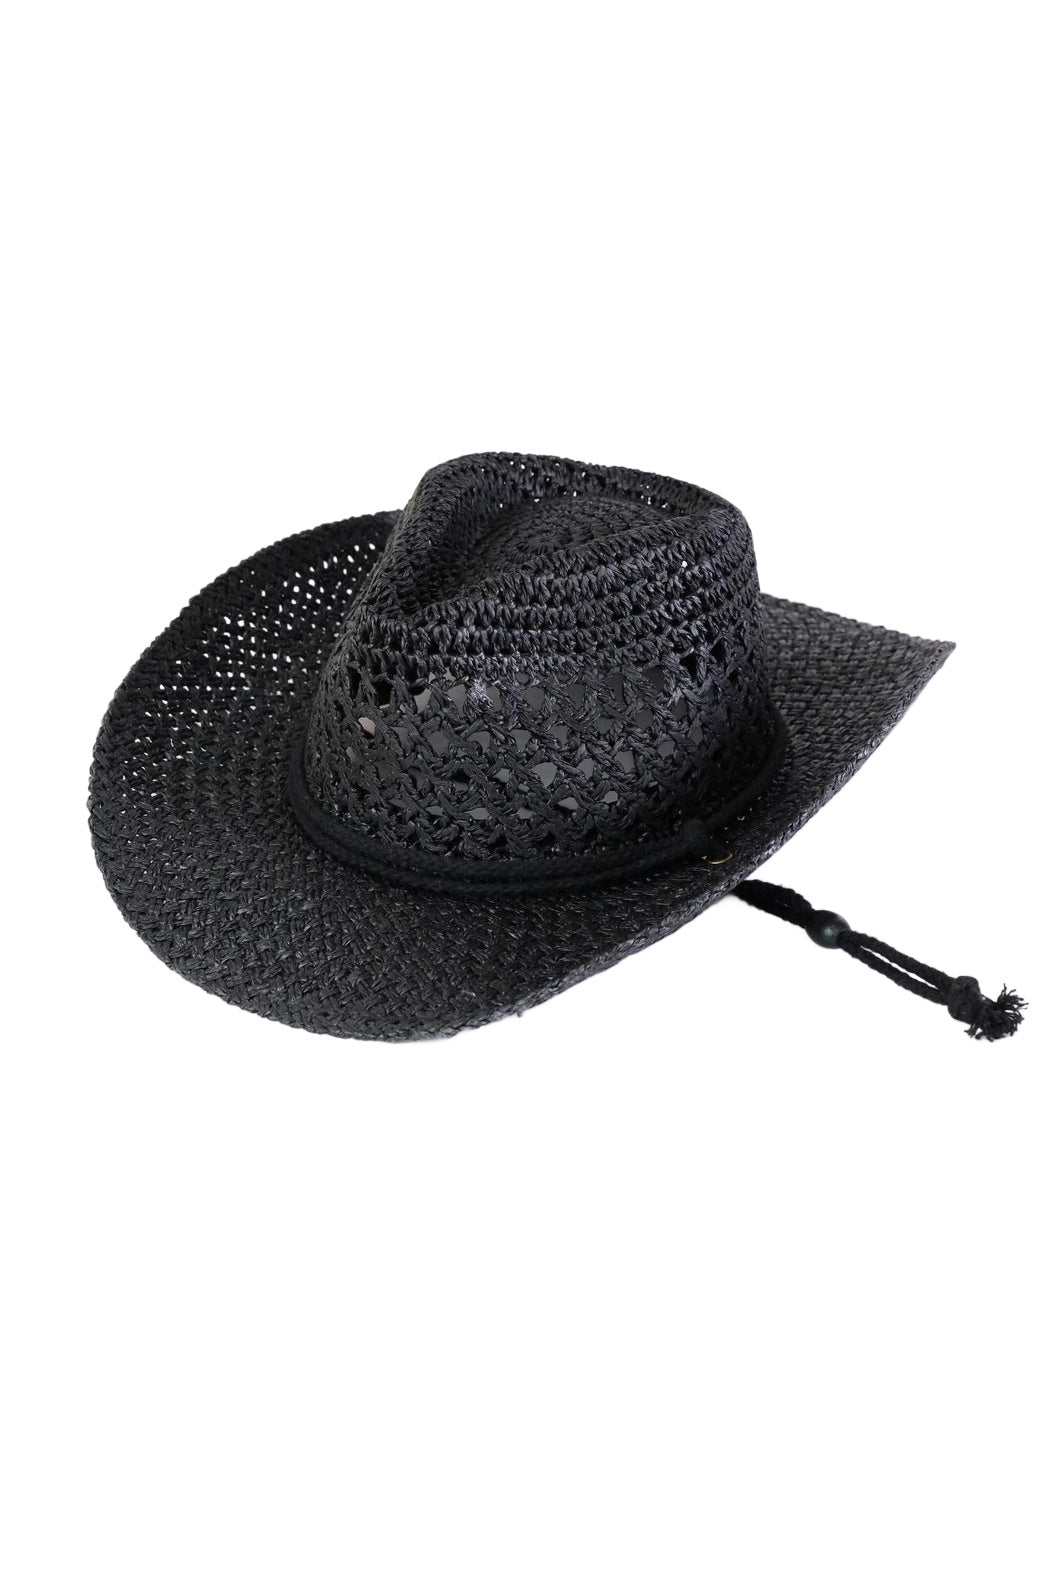 Straw Corded Cowboy Hat